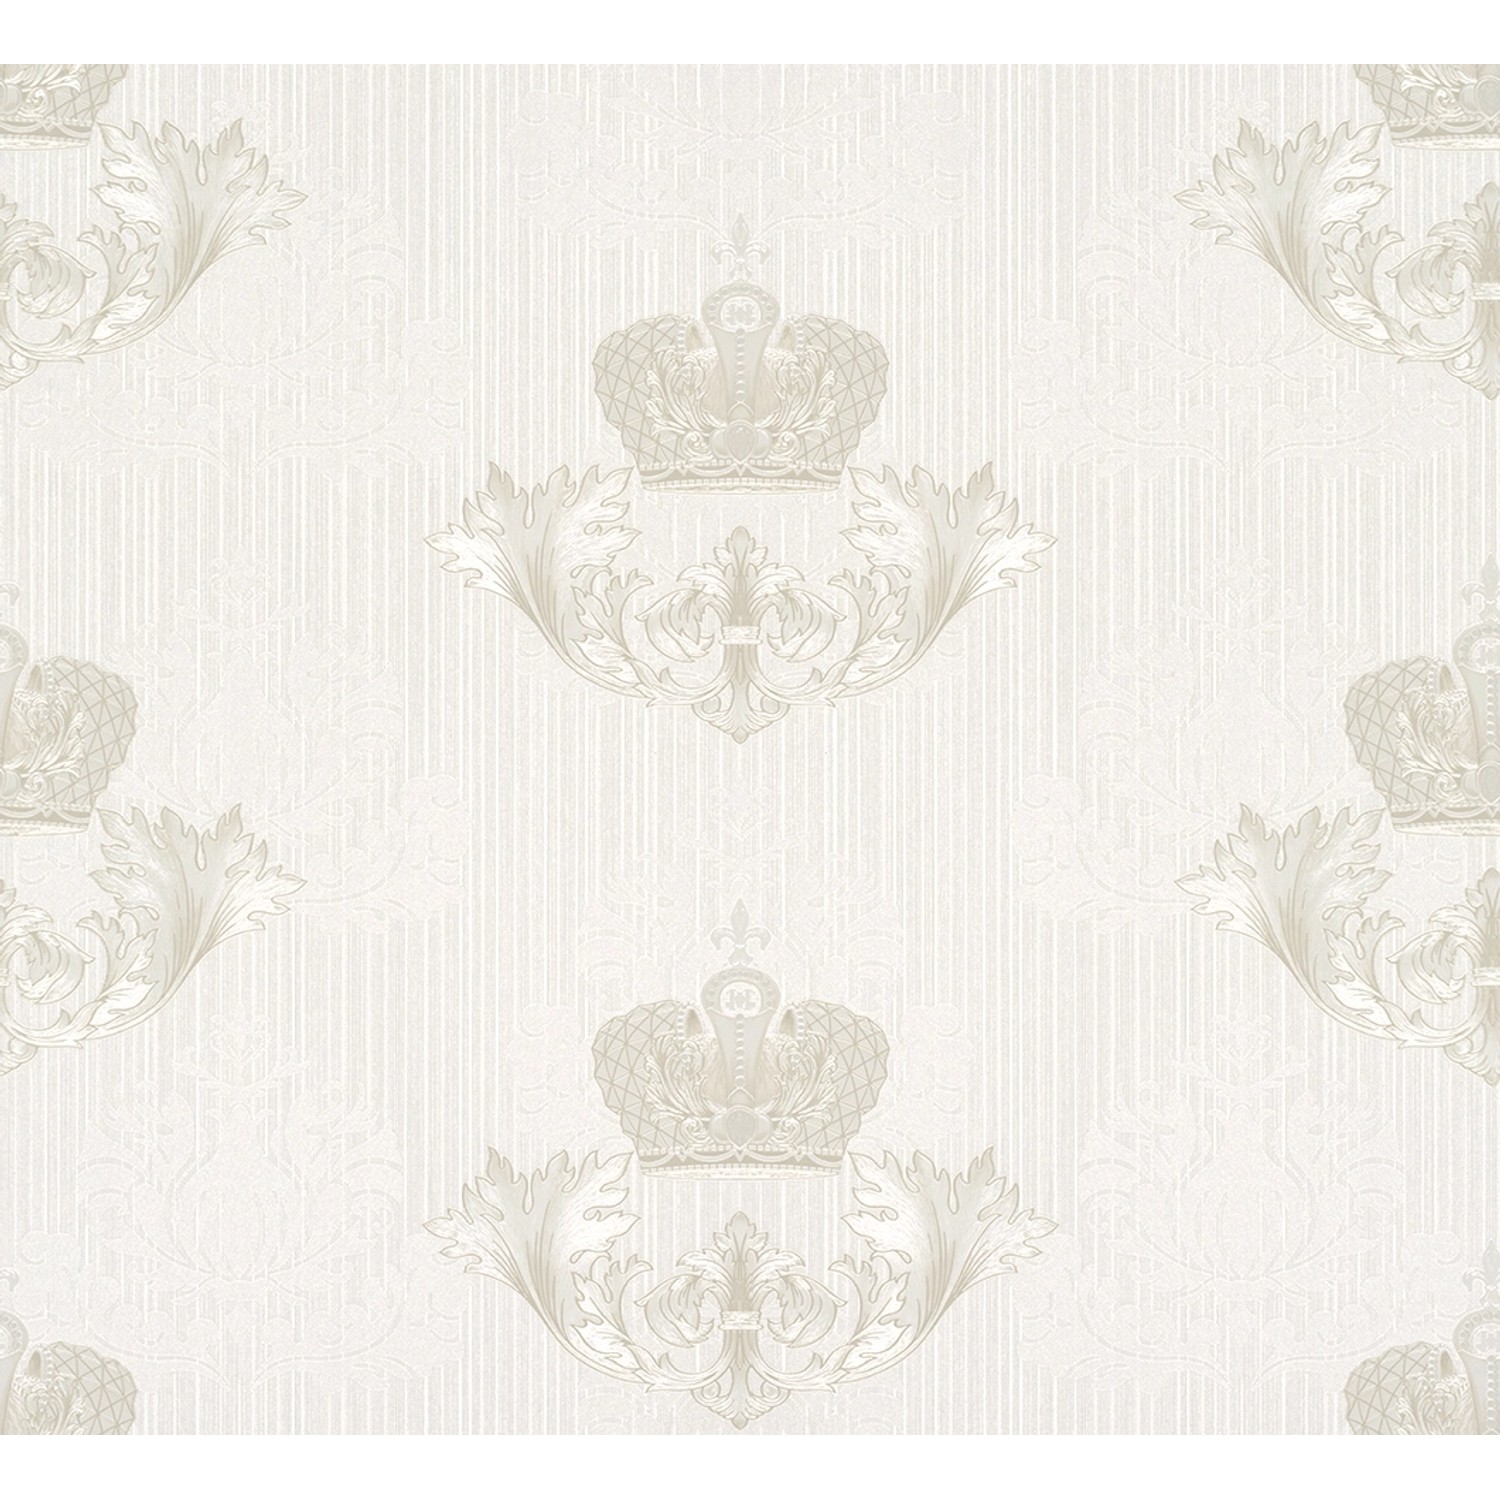 Glööckler Vliestapete Imperial Krone Blattmotiv Wappenoptik Pearl